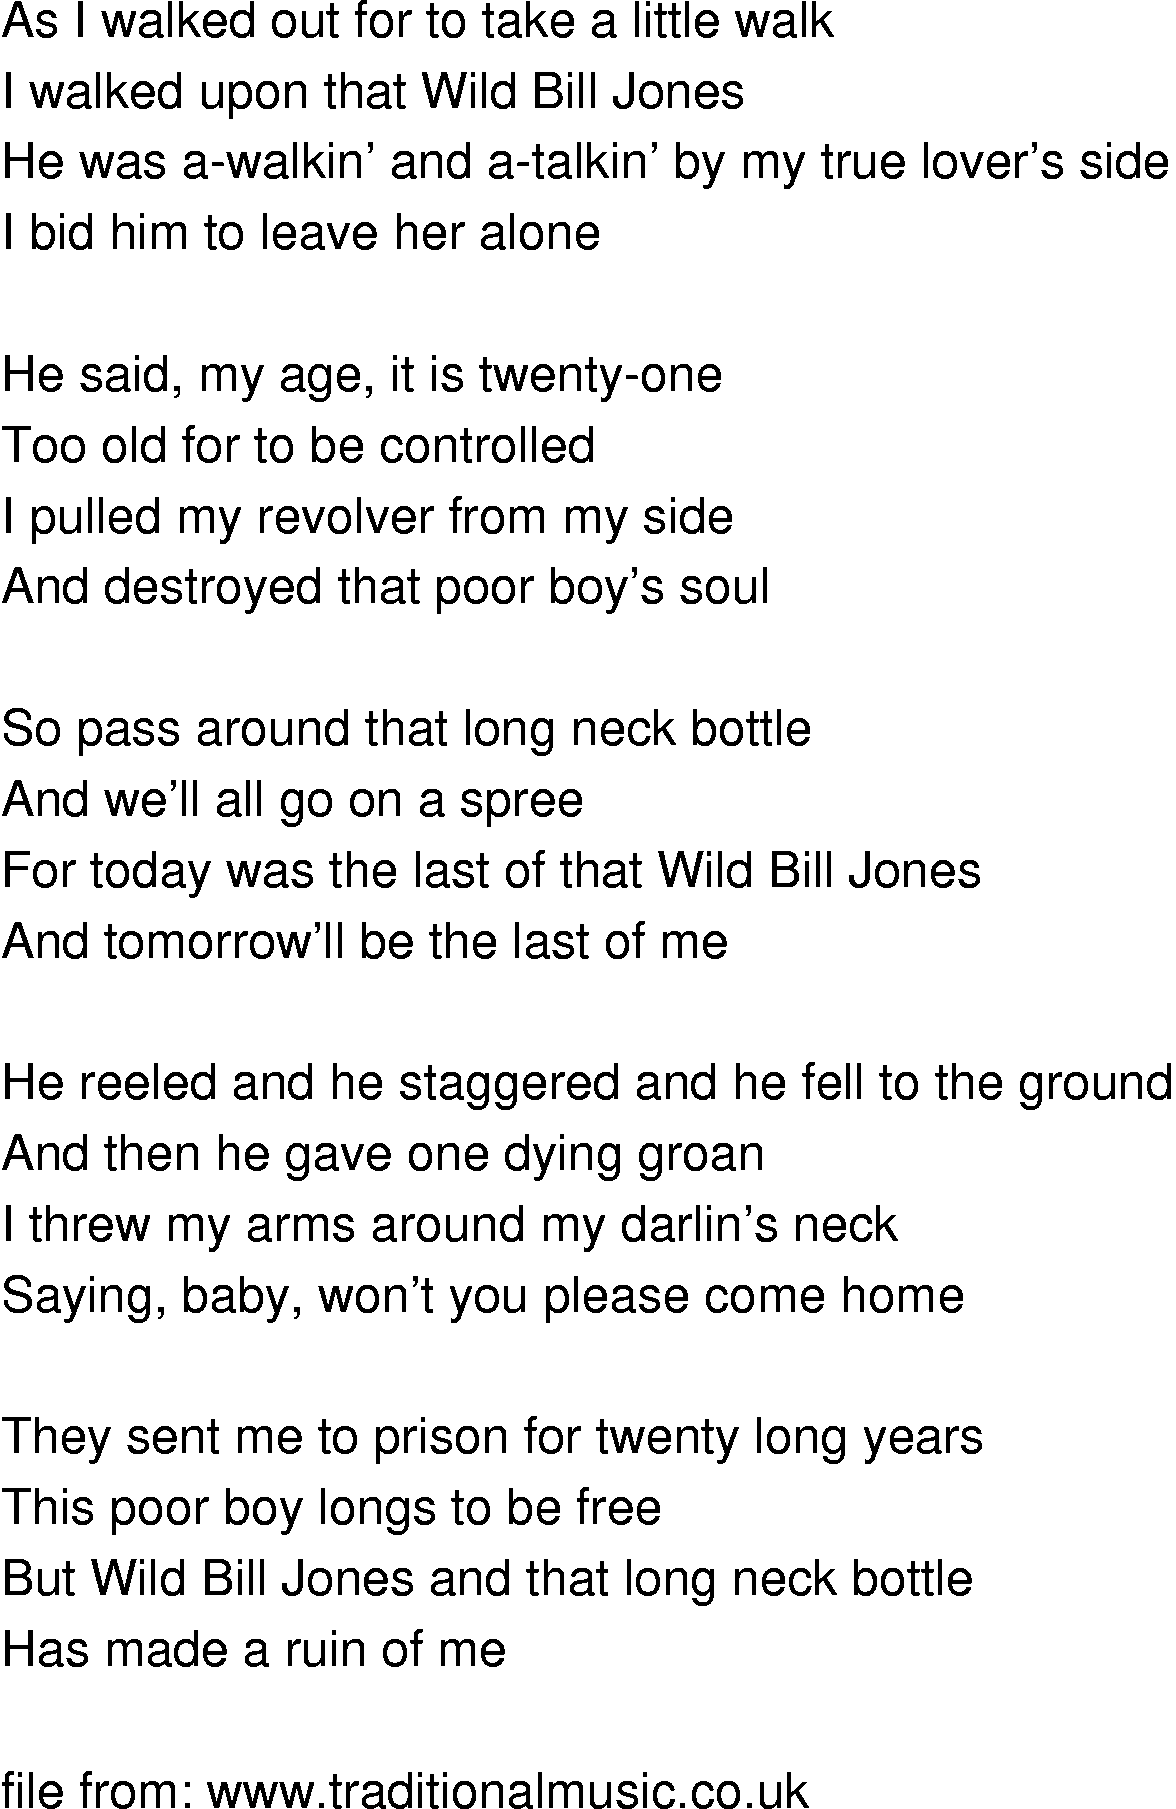 Old-Time (oldtimey) Song Lyrics - wild bill jones